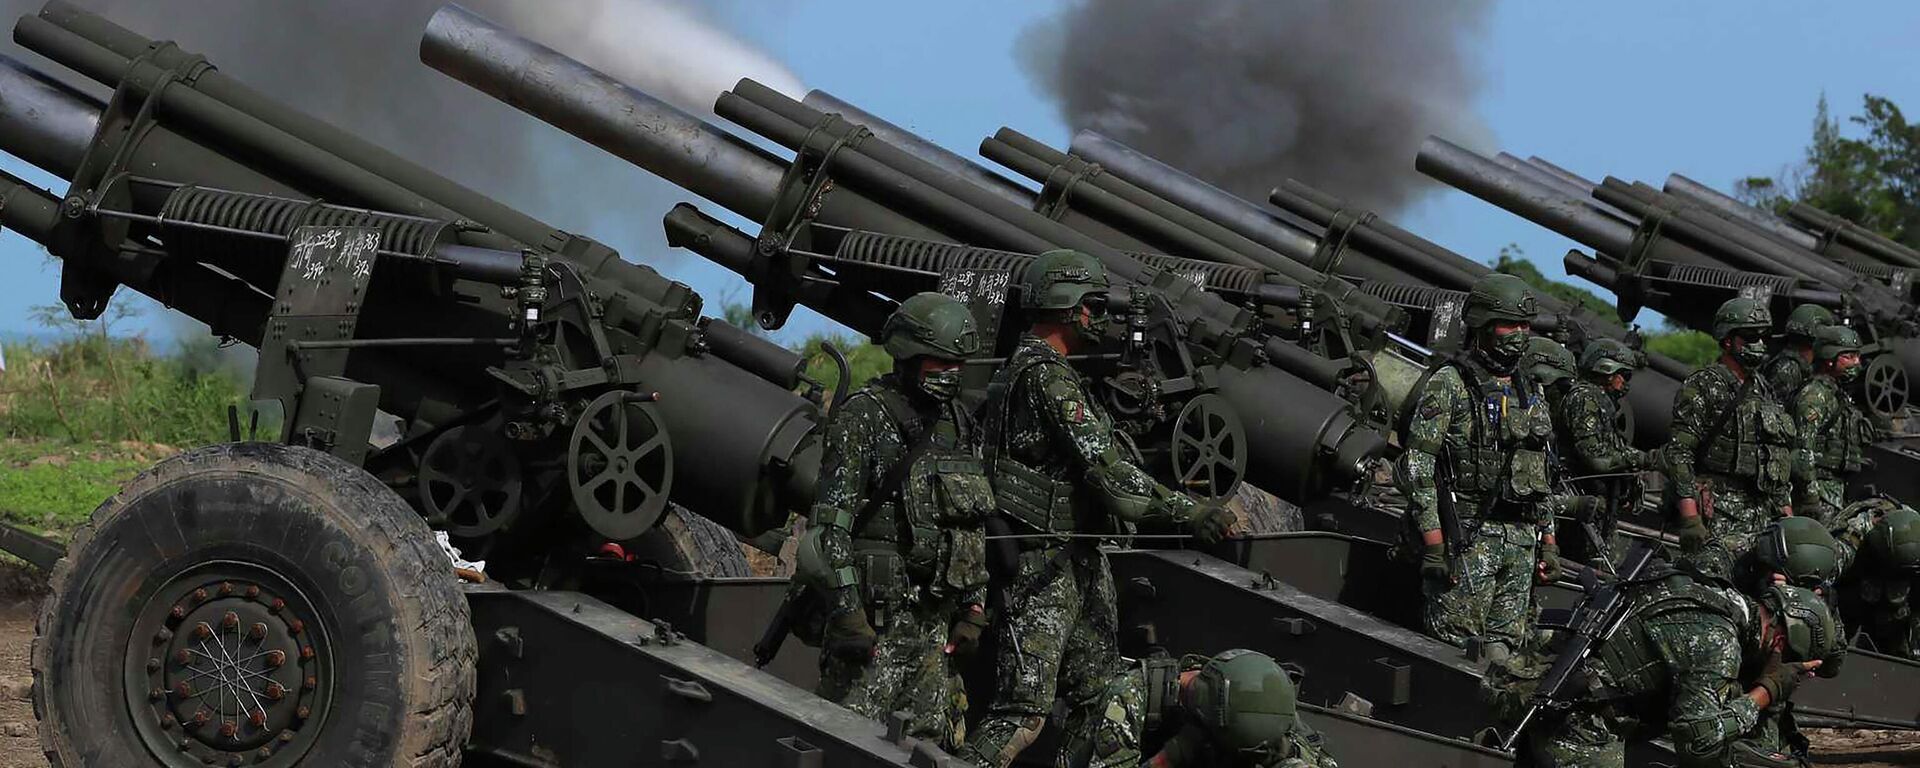 Armas de artilharia taiwanesas disparando durante exercícios antiaterrissagem Han Guang realizados ao longo da costa de Pingtung, Taiwan, 16 de setembro de 2021 - Sputnik Brasil, 1920, 16.02.2023